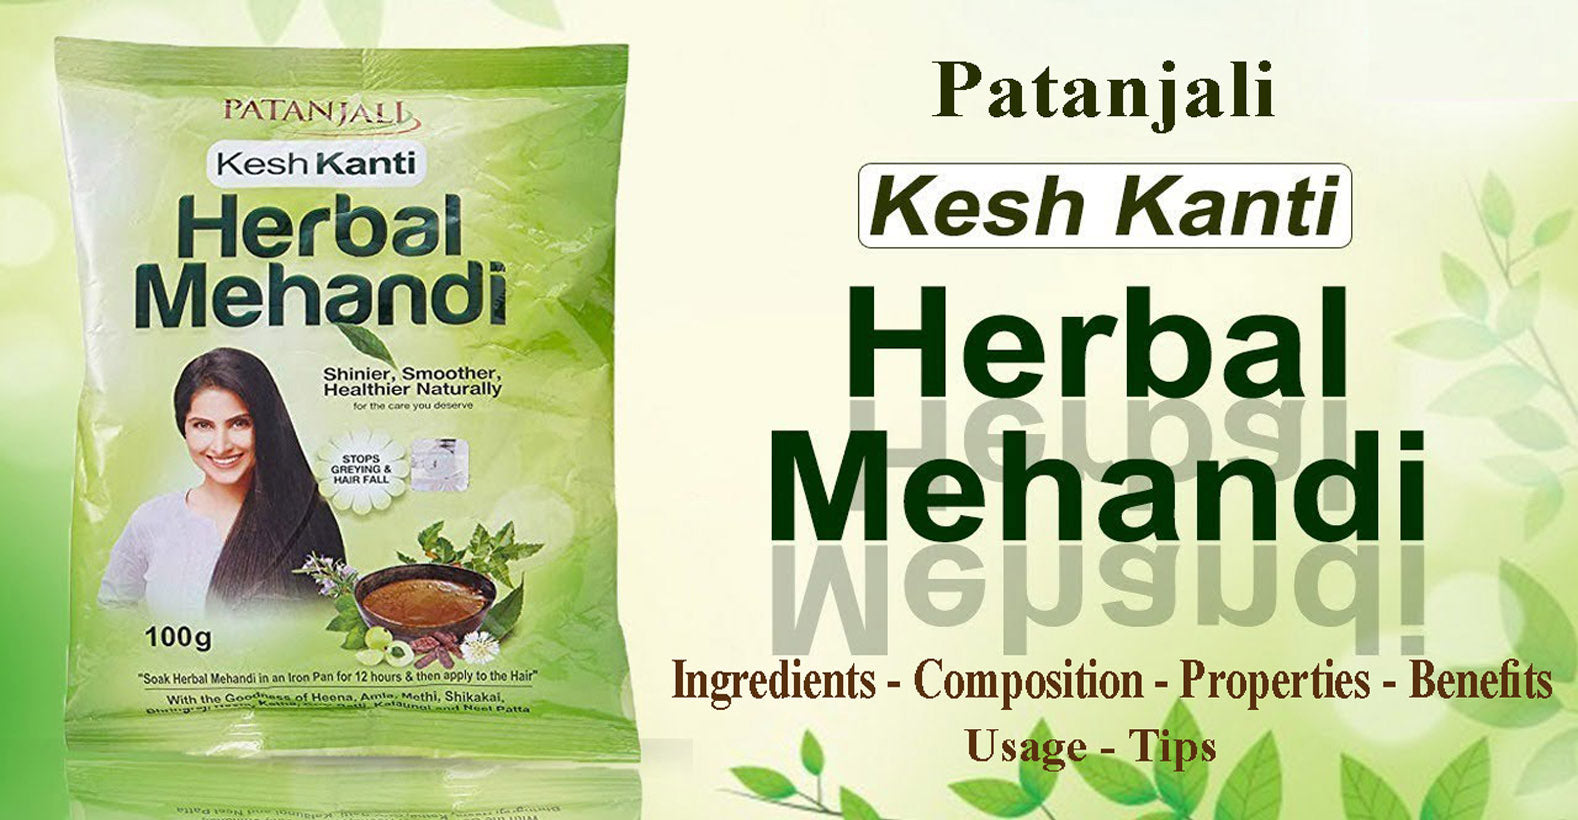 Patanjali Herbal Mehandi - Ingredients, Composition, Properties, Benefits, Usage, Tips